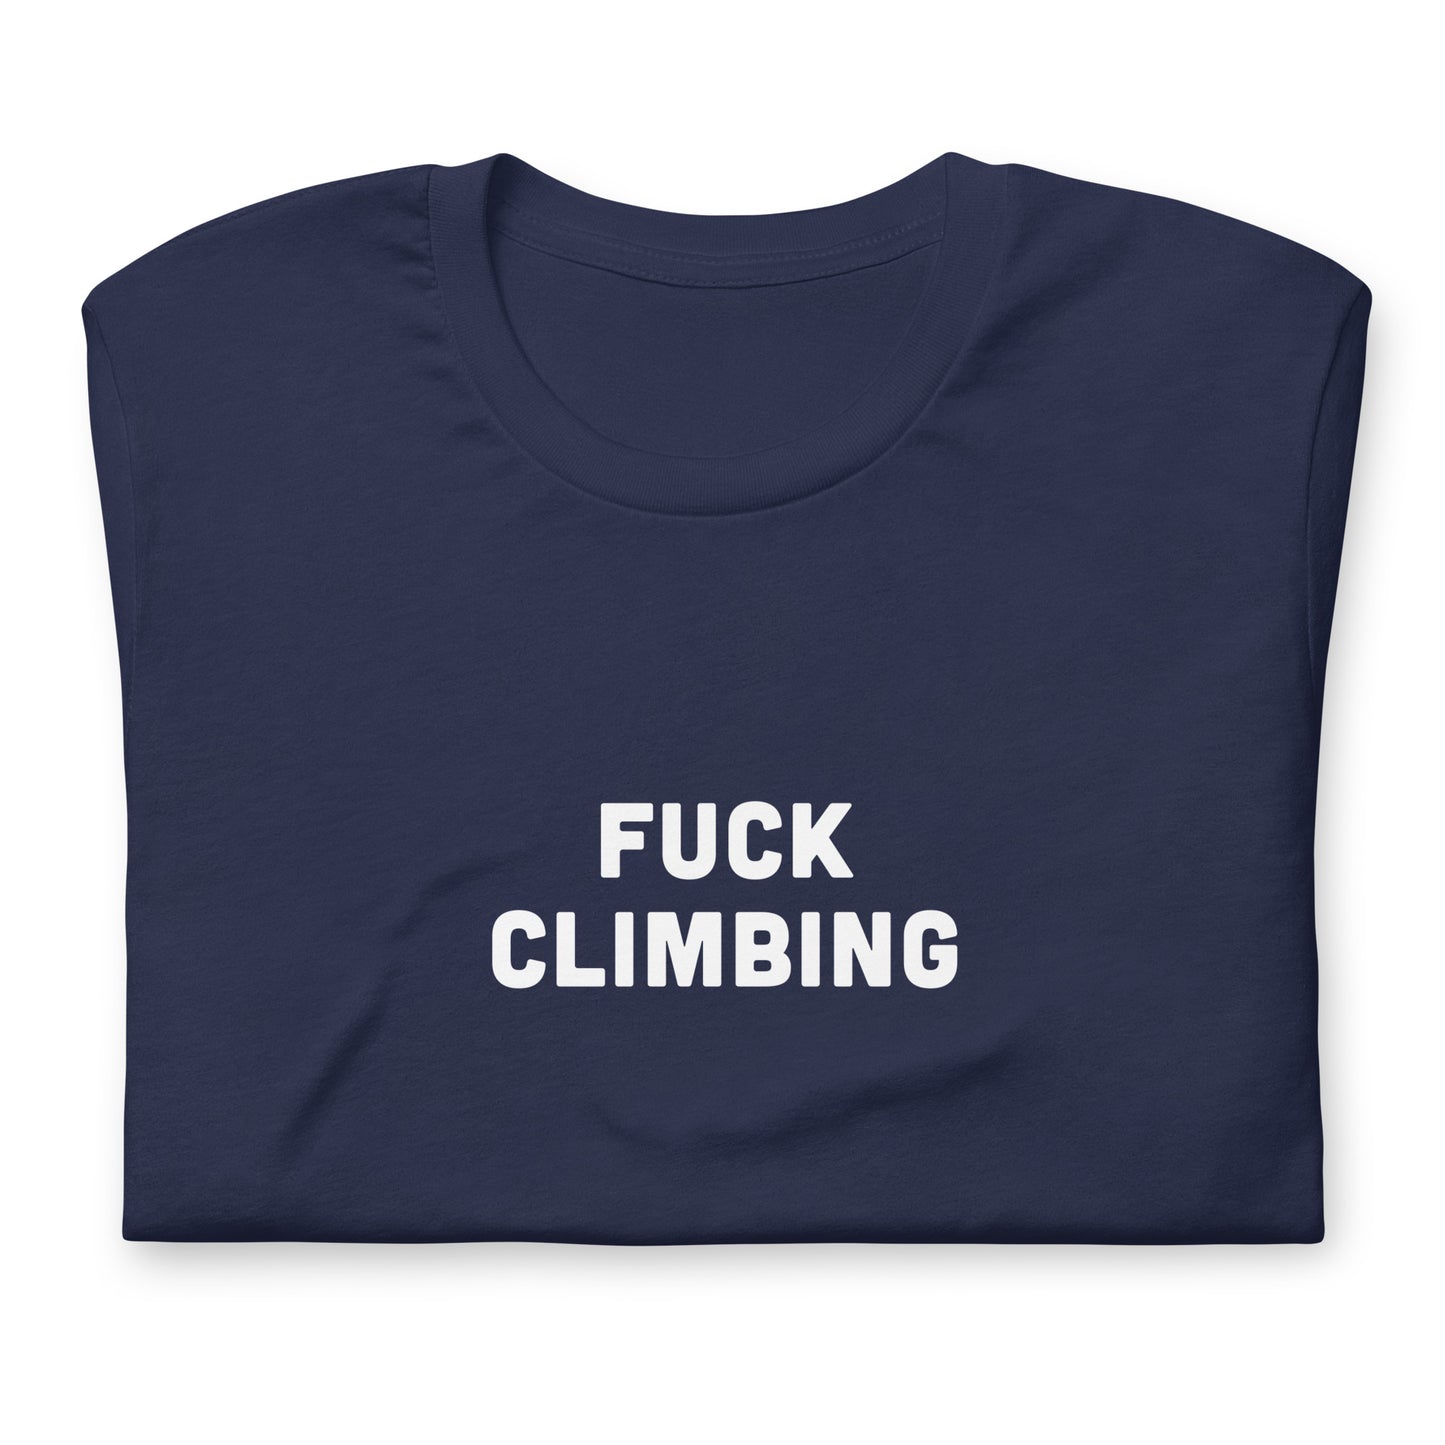 Fuck Climbing T-Shirt Size L Color Black